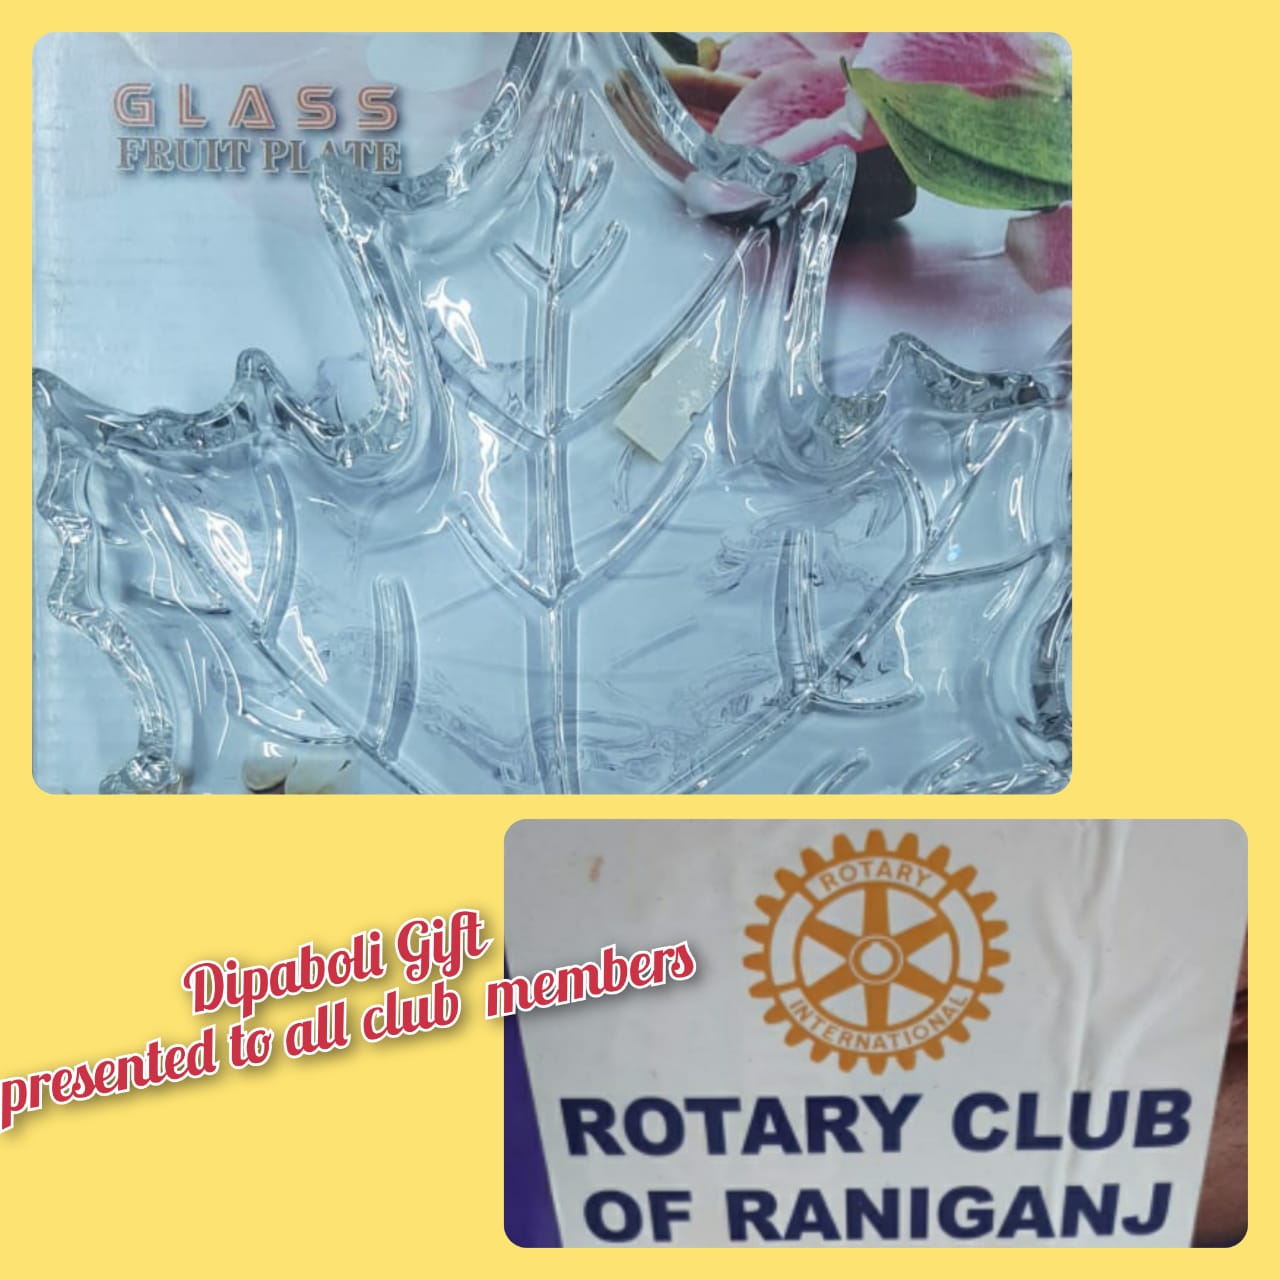 Diwali Gift Presented to all club members to increase Friendship & Felowship